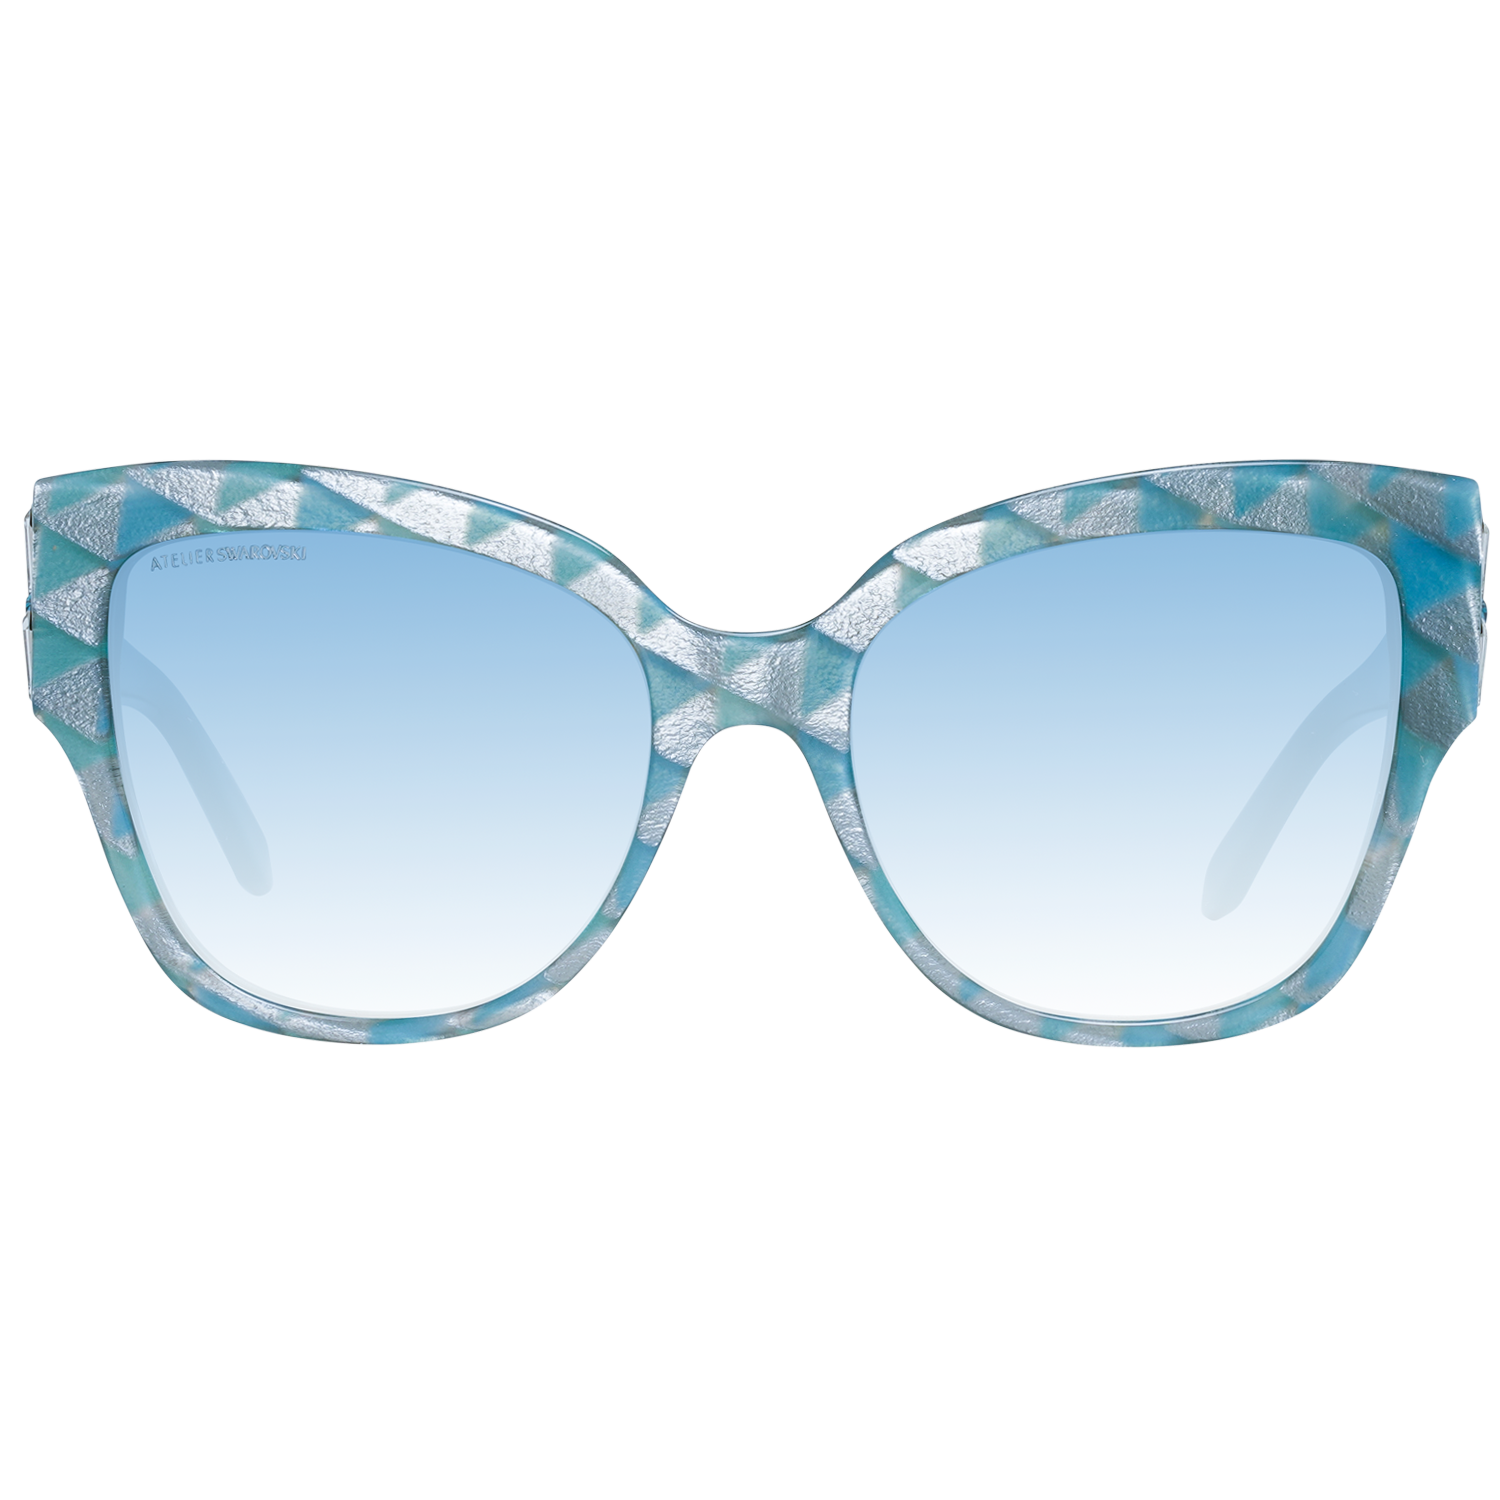 Atelier Swarovski Sunglasses Atelier Swarovski Sunglasses SK0161-P 54 87P Eyeglasses Eyewear UK USA Australia 